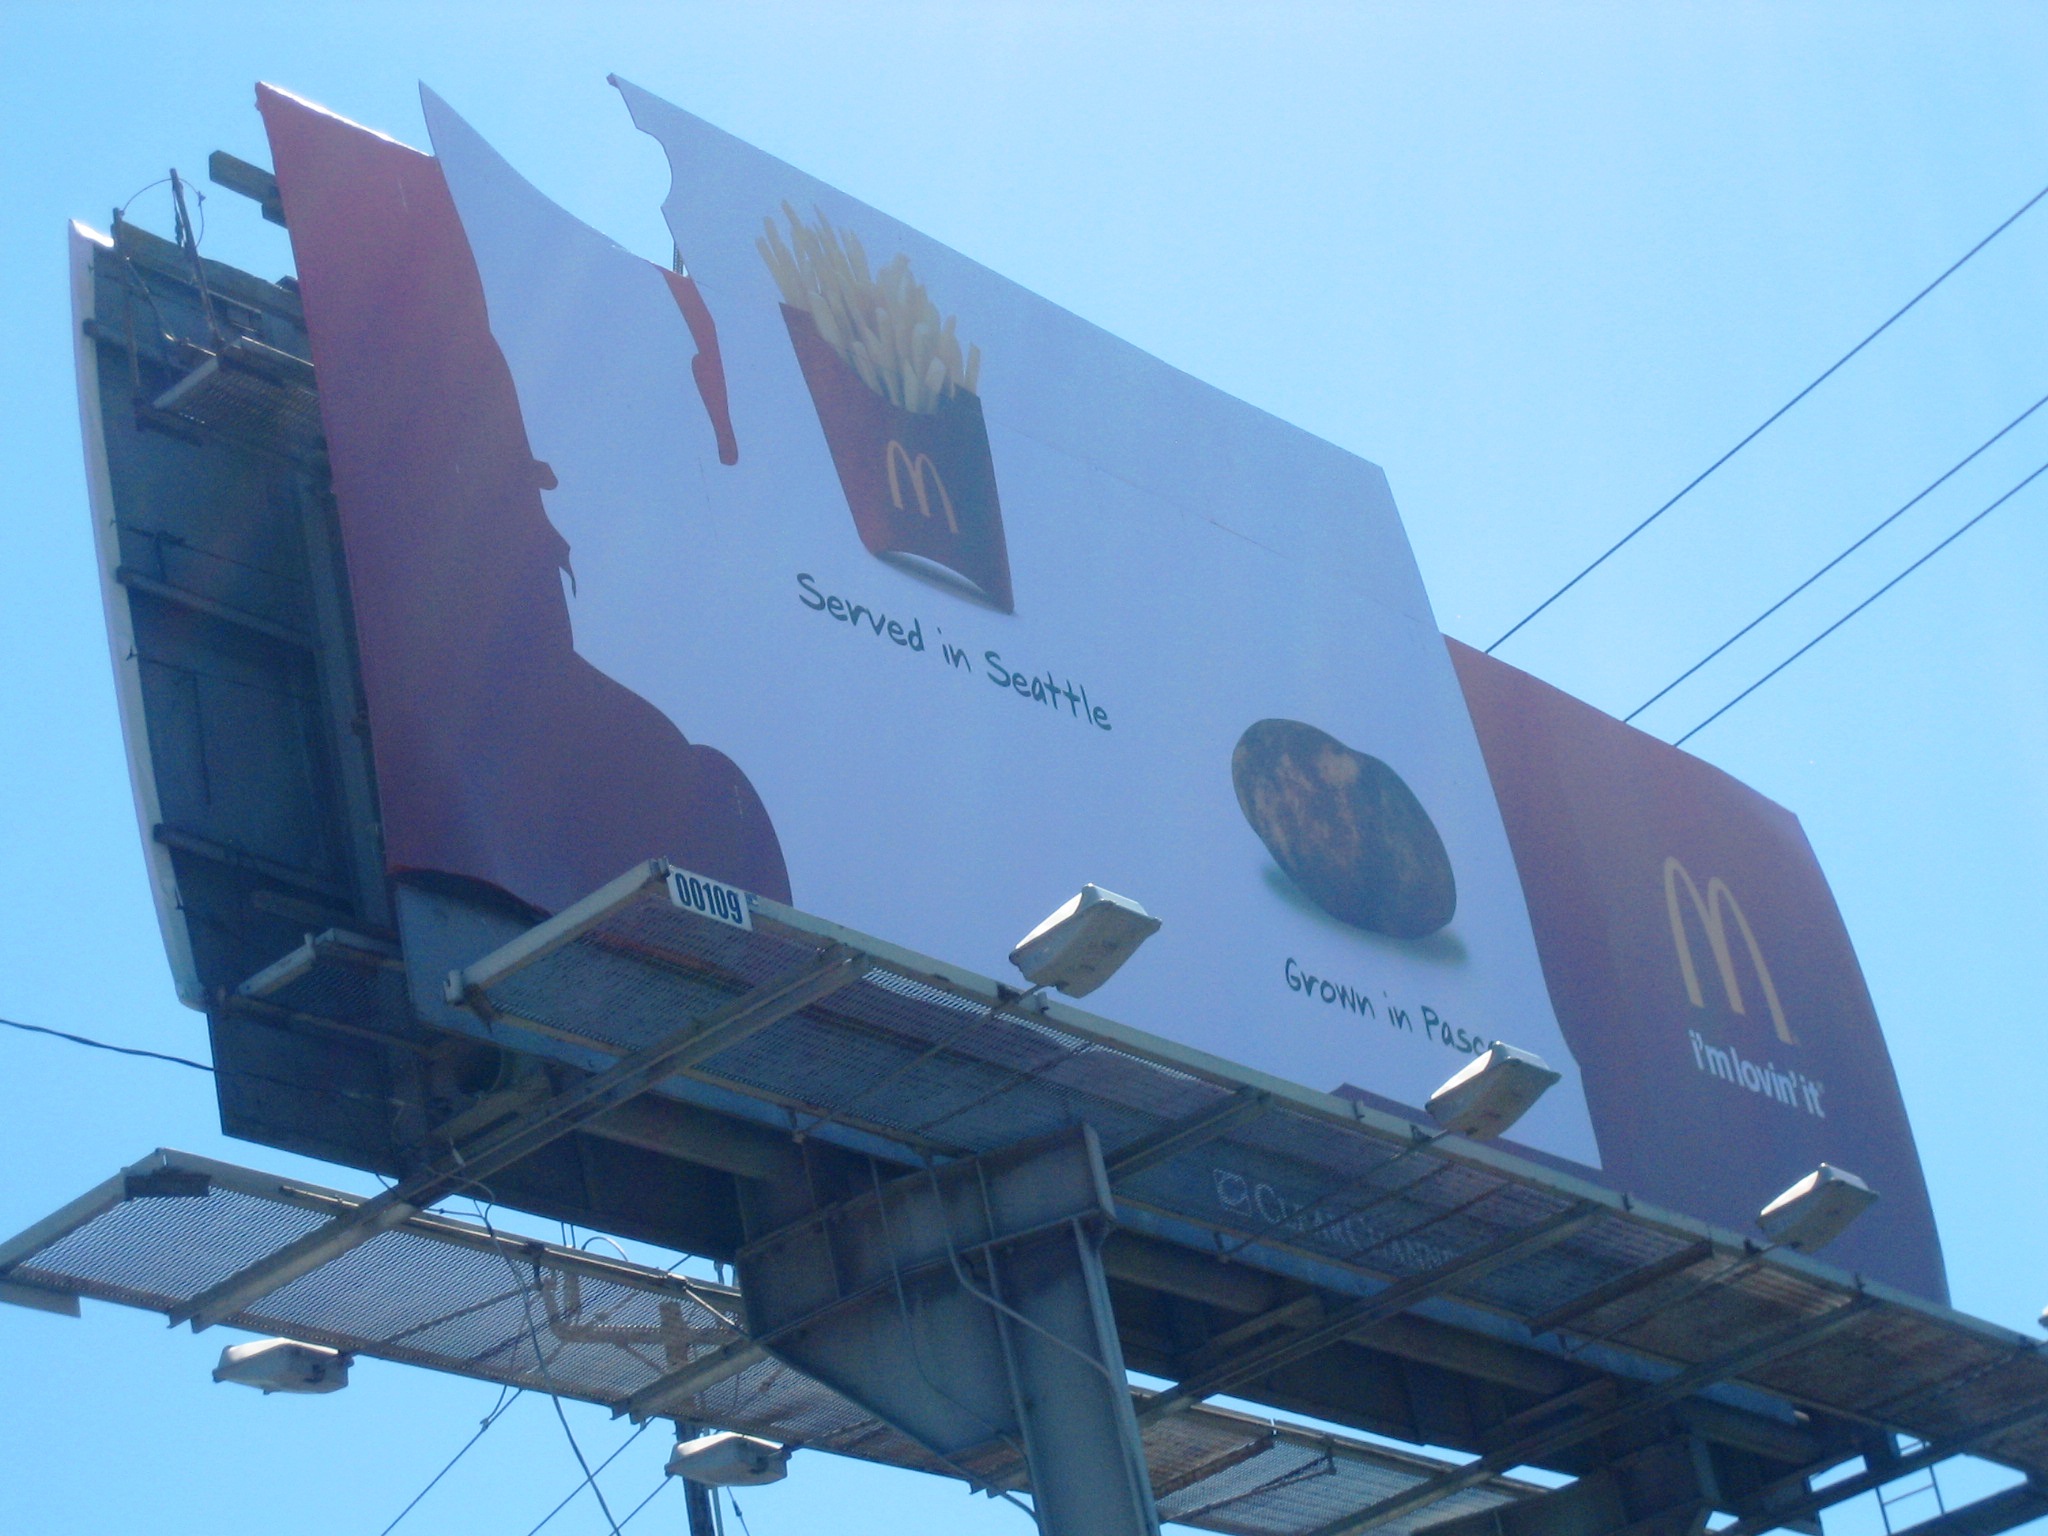 Another McDonald's billboard